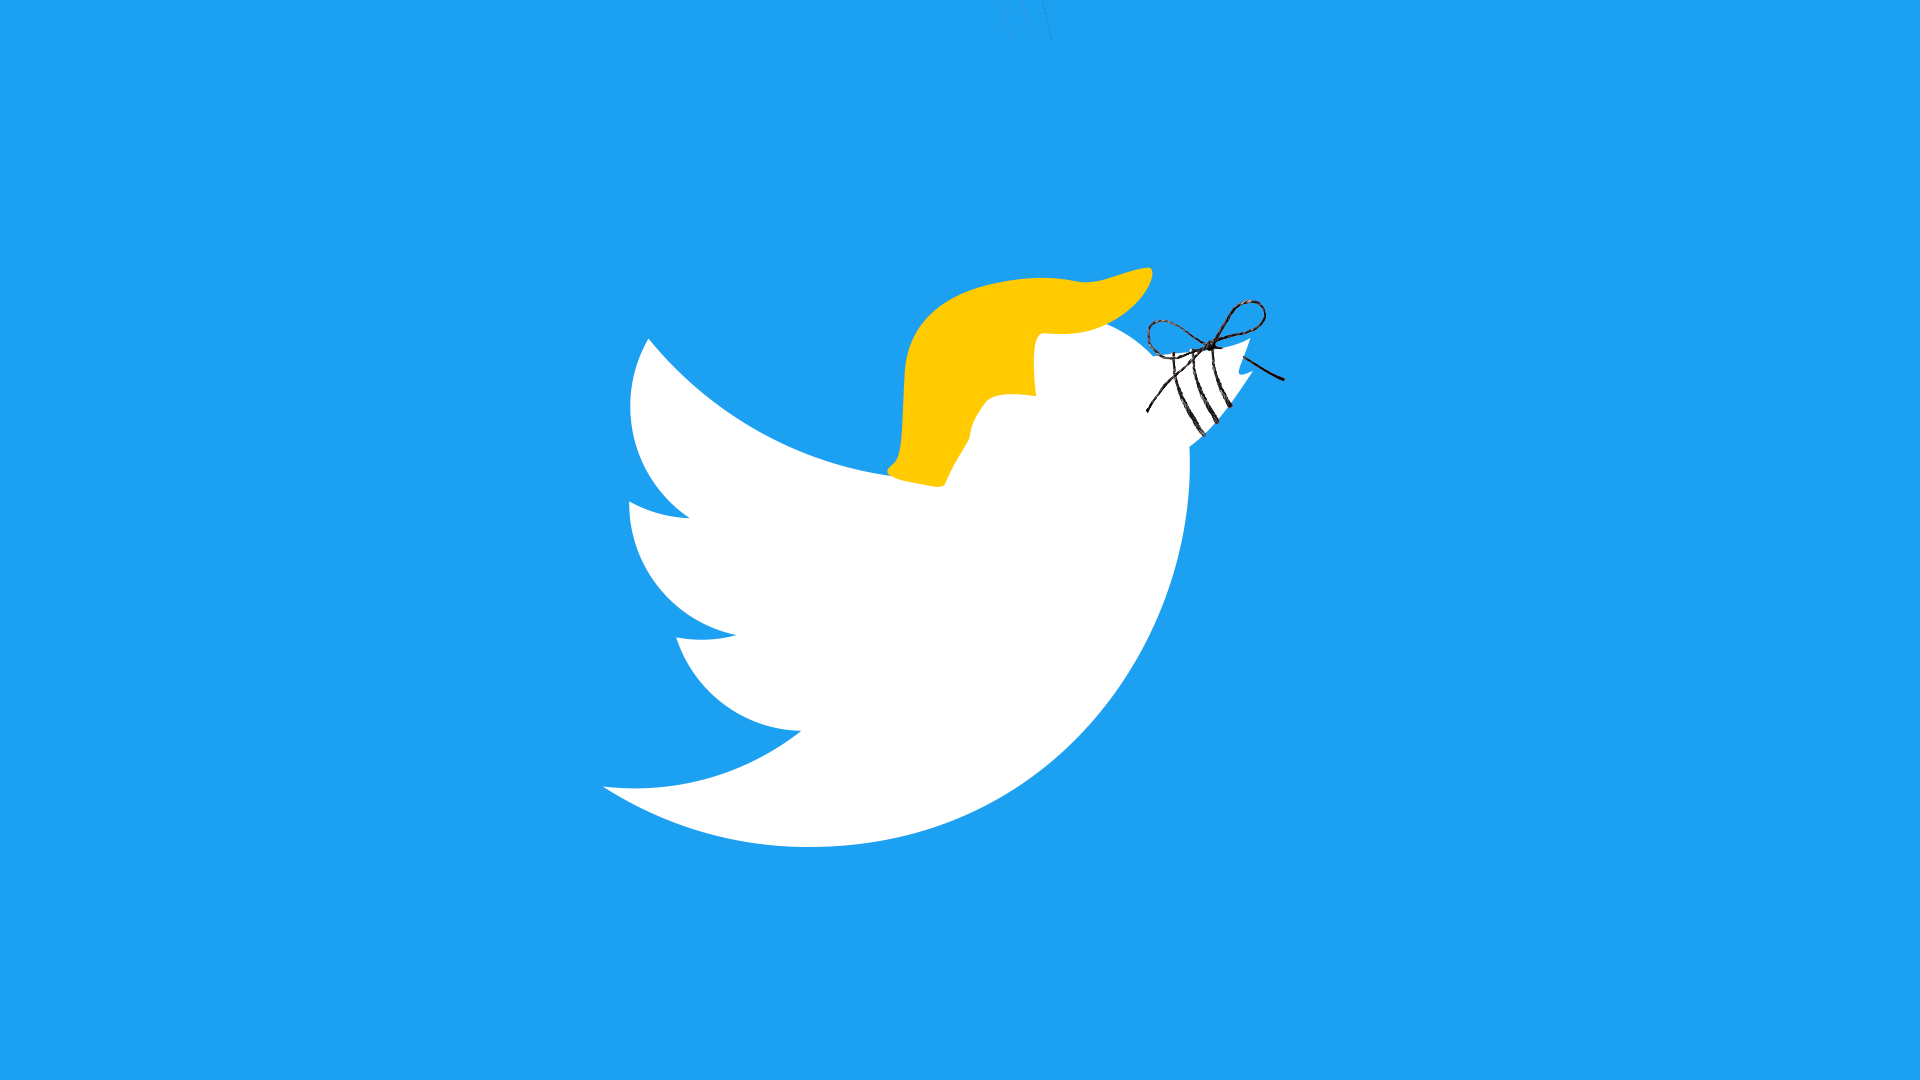 Twitter logo as Trump illustration